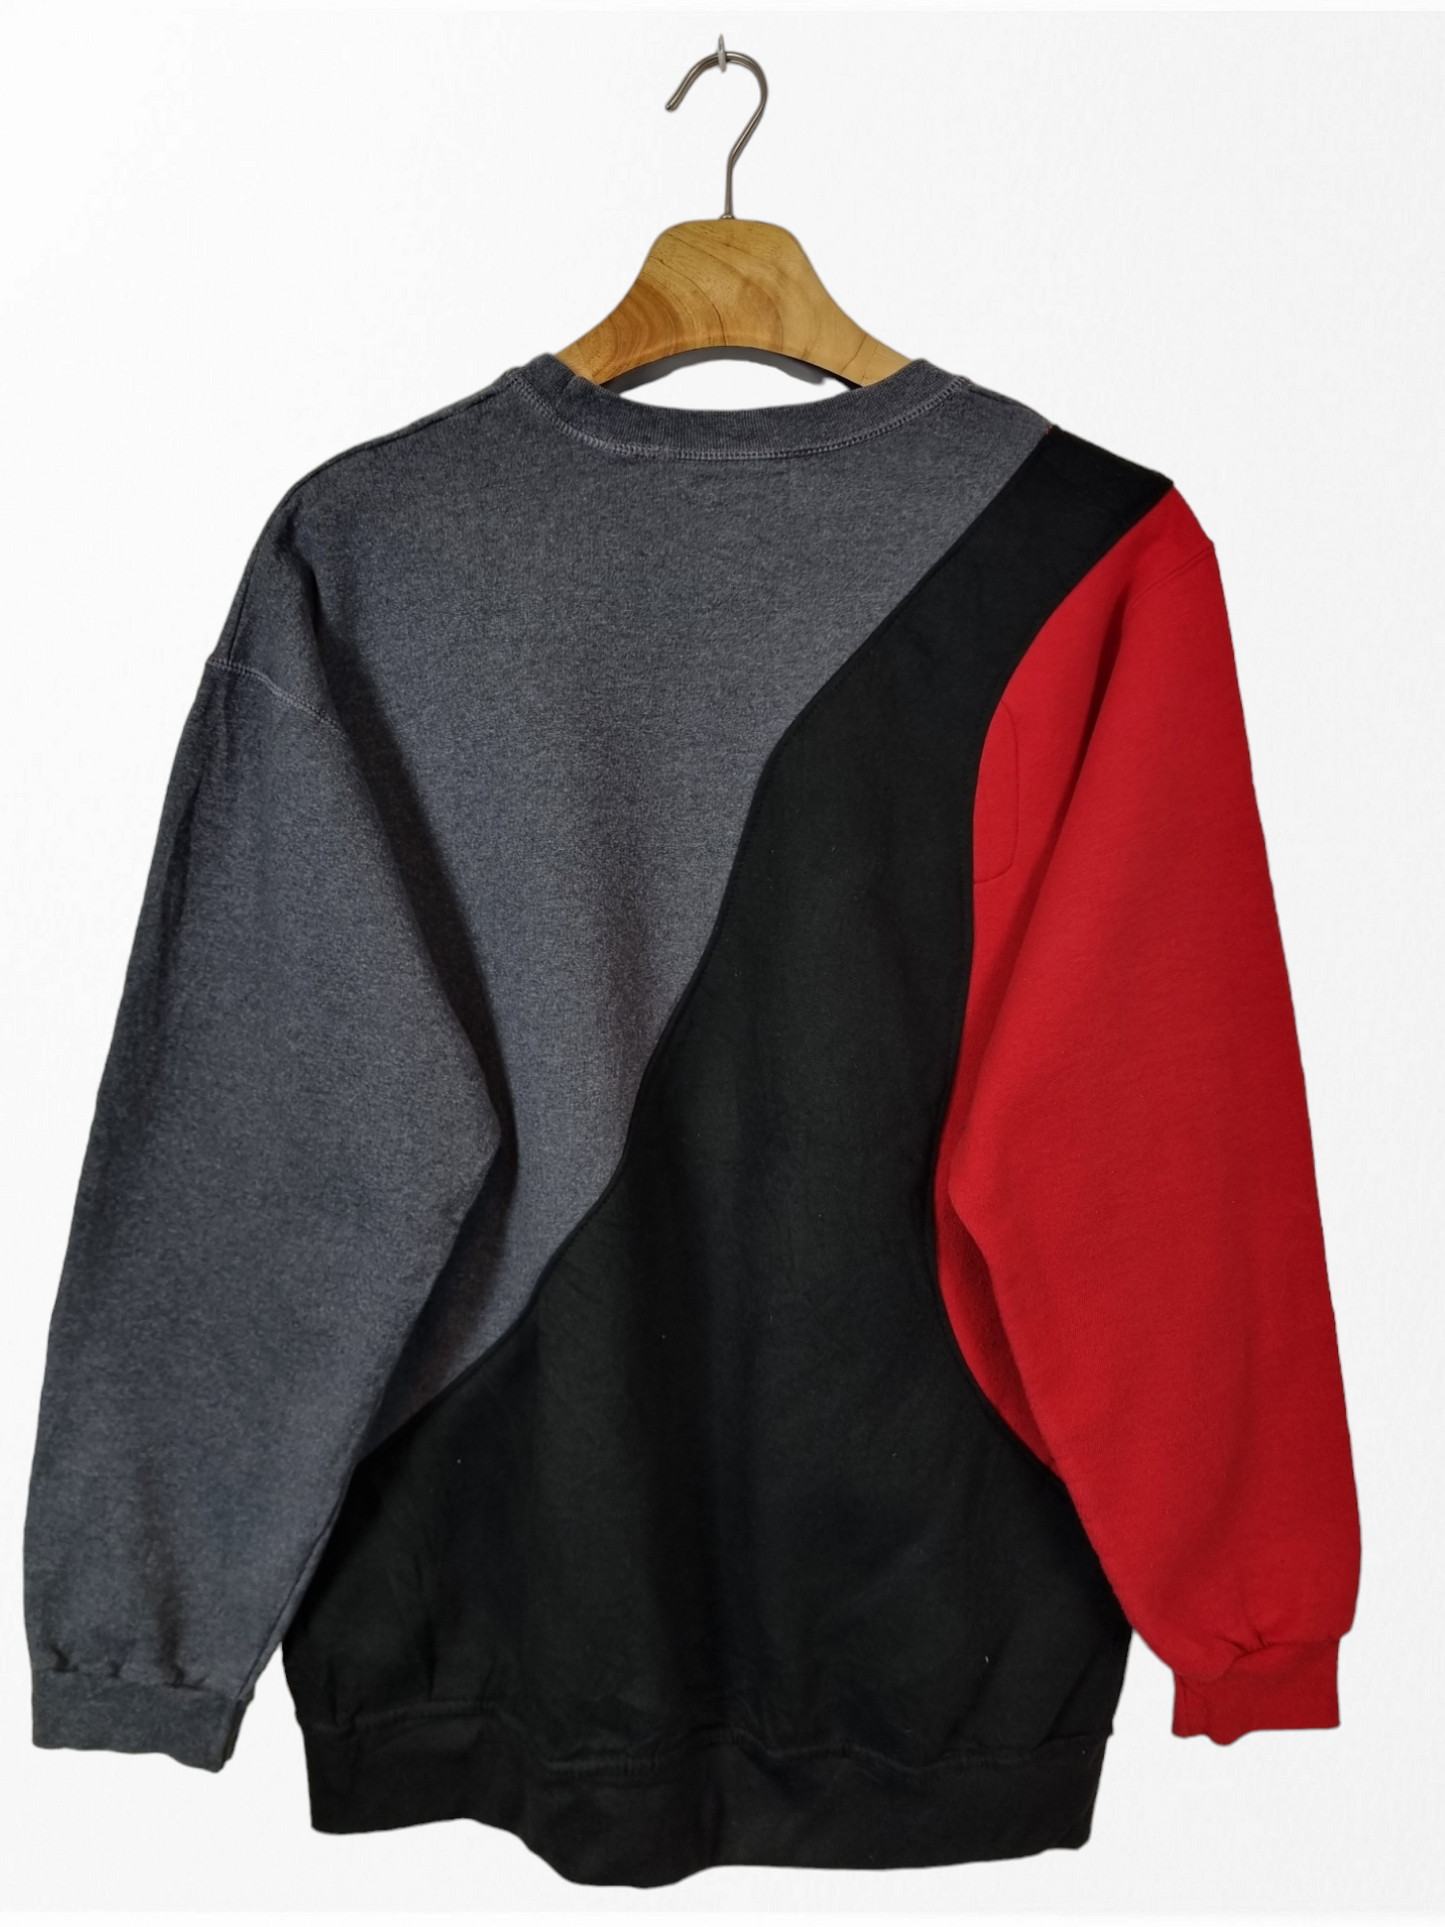 Nike chest swoosh logo sweater maat M